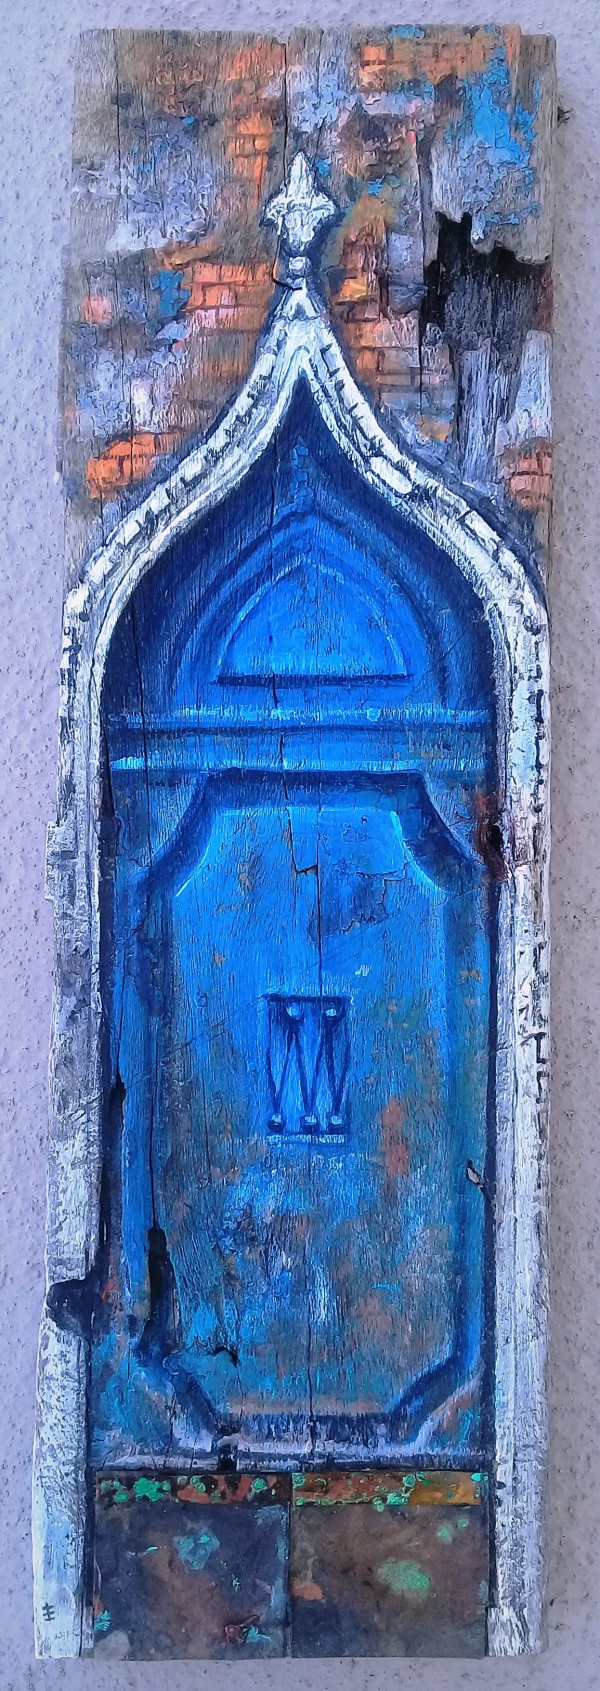 ITALY - Blue Venice Door by Elena Merlina - Paint The World Tour